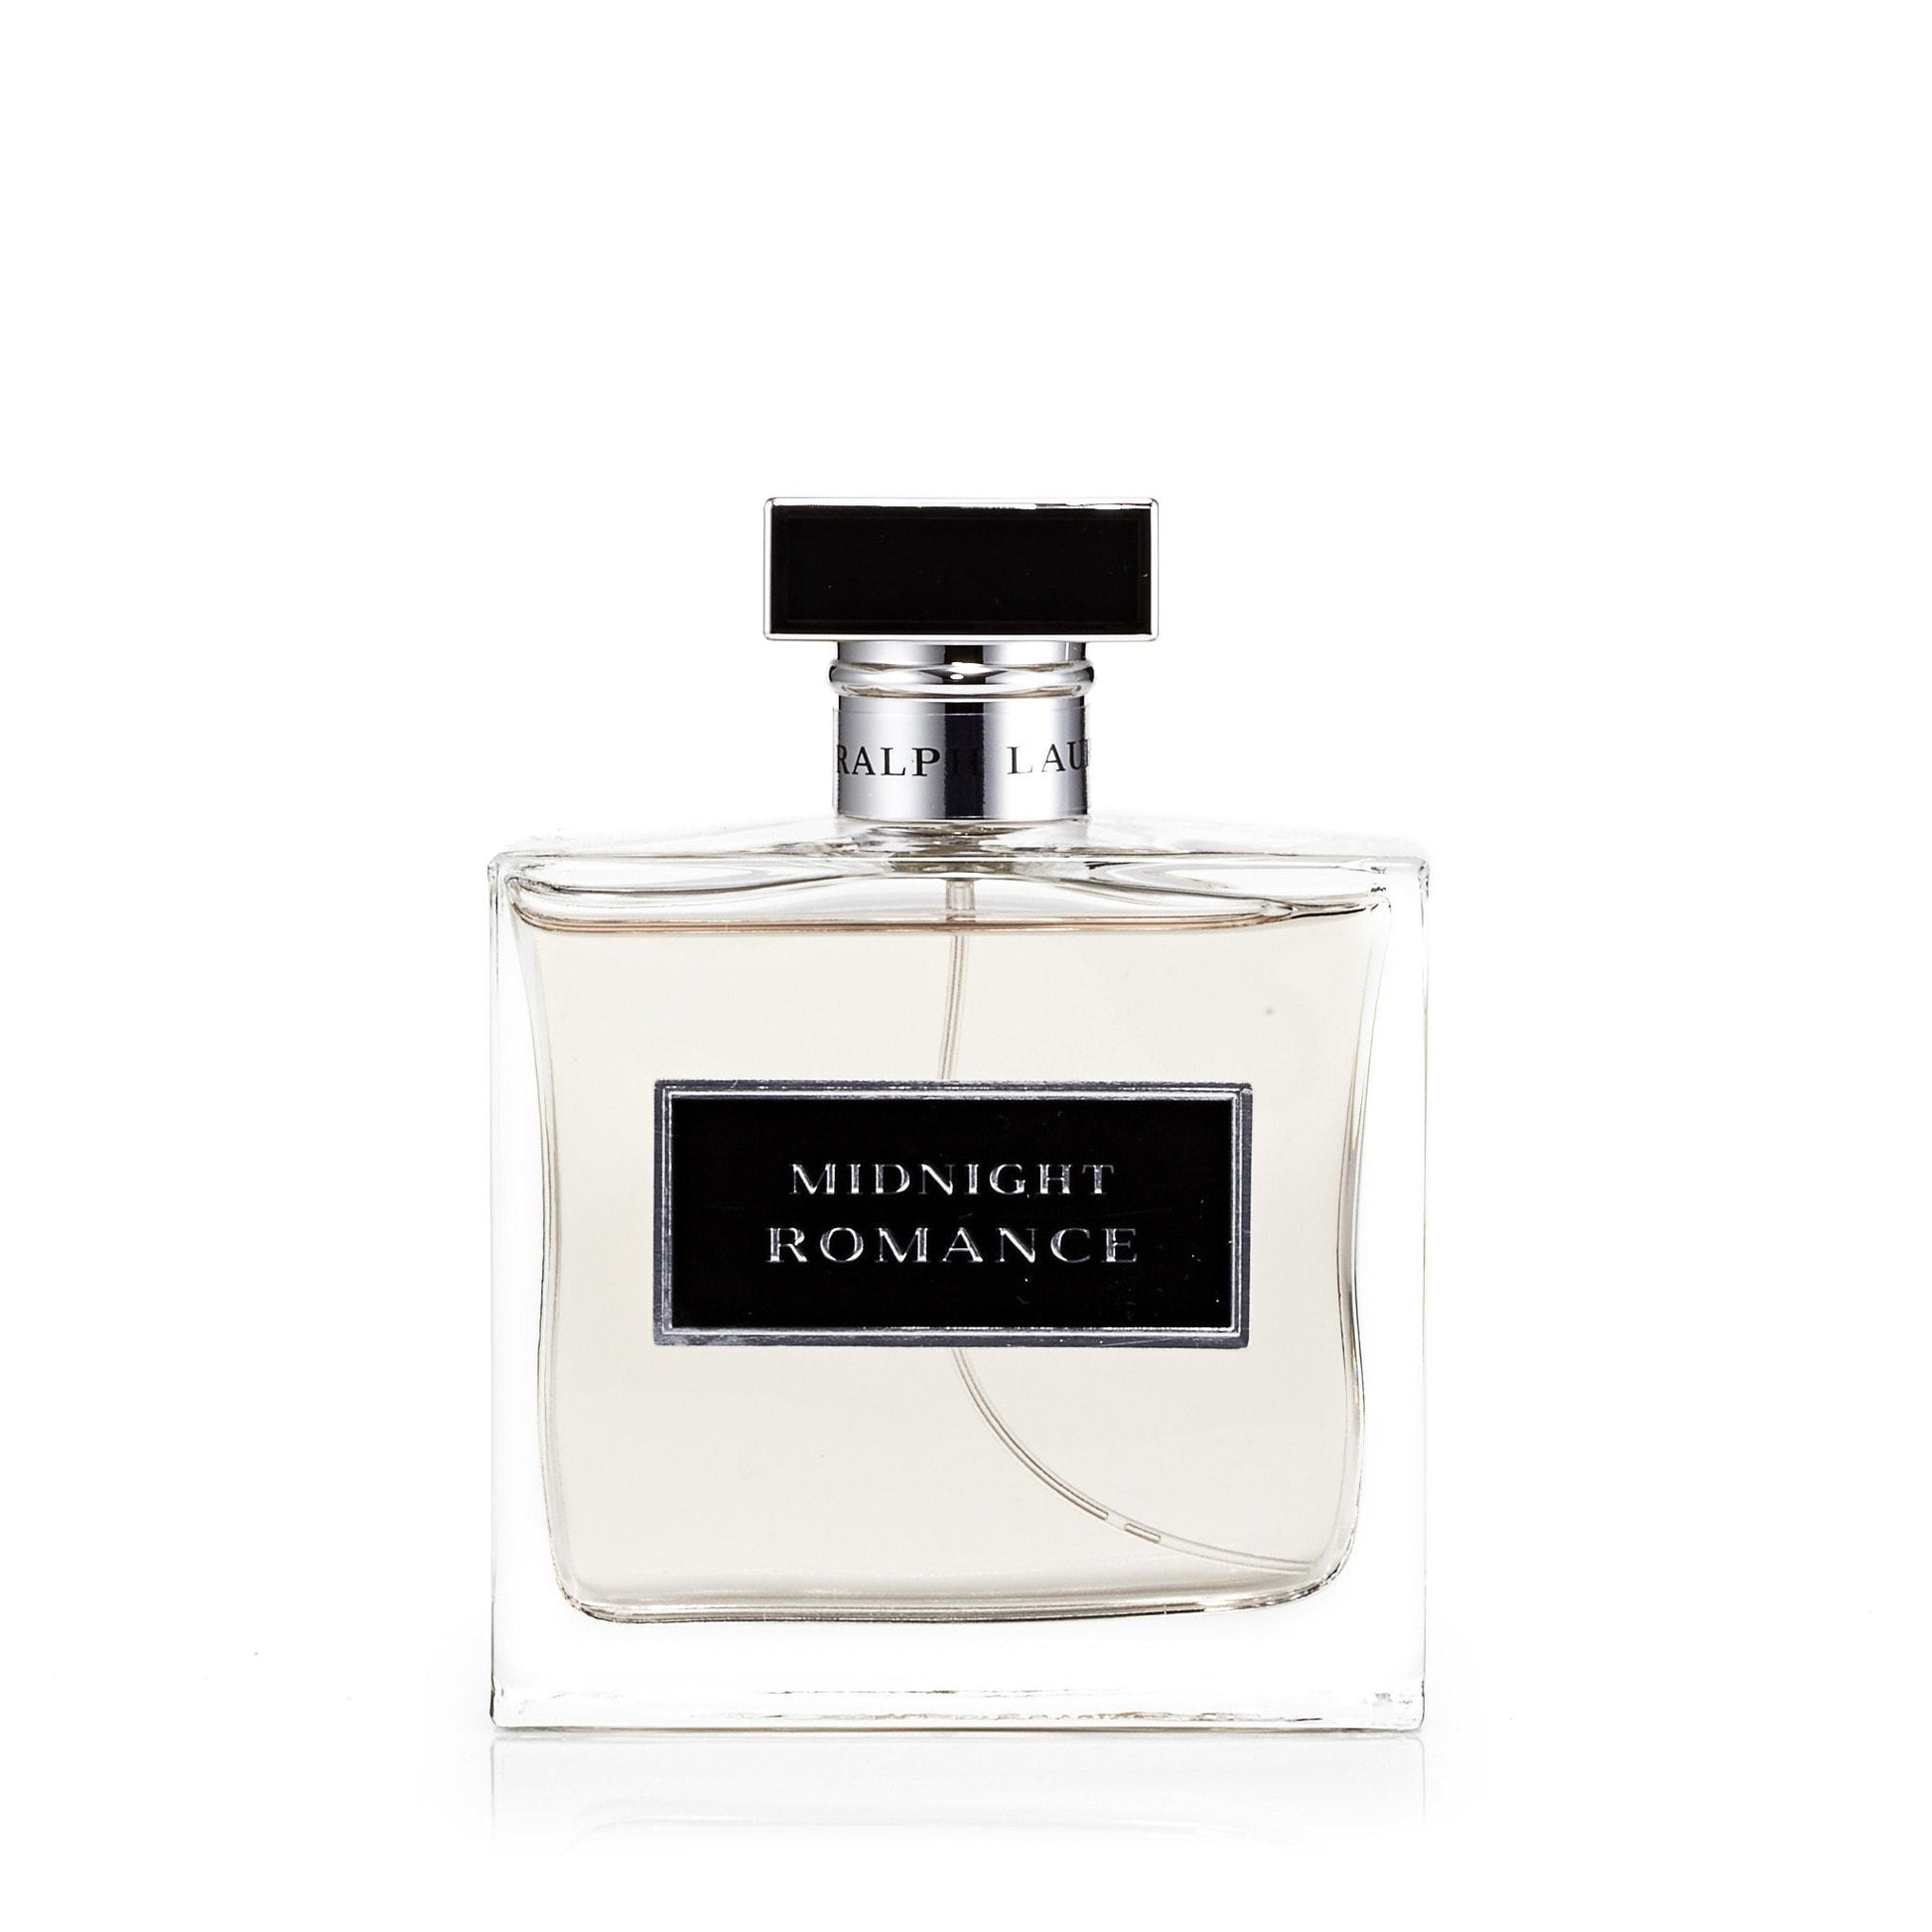 Romance Midnight Eau de Parfum Spray for Women by Ralph Lauren, Product image 1